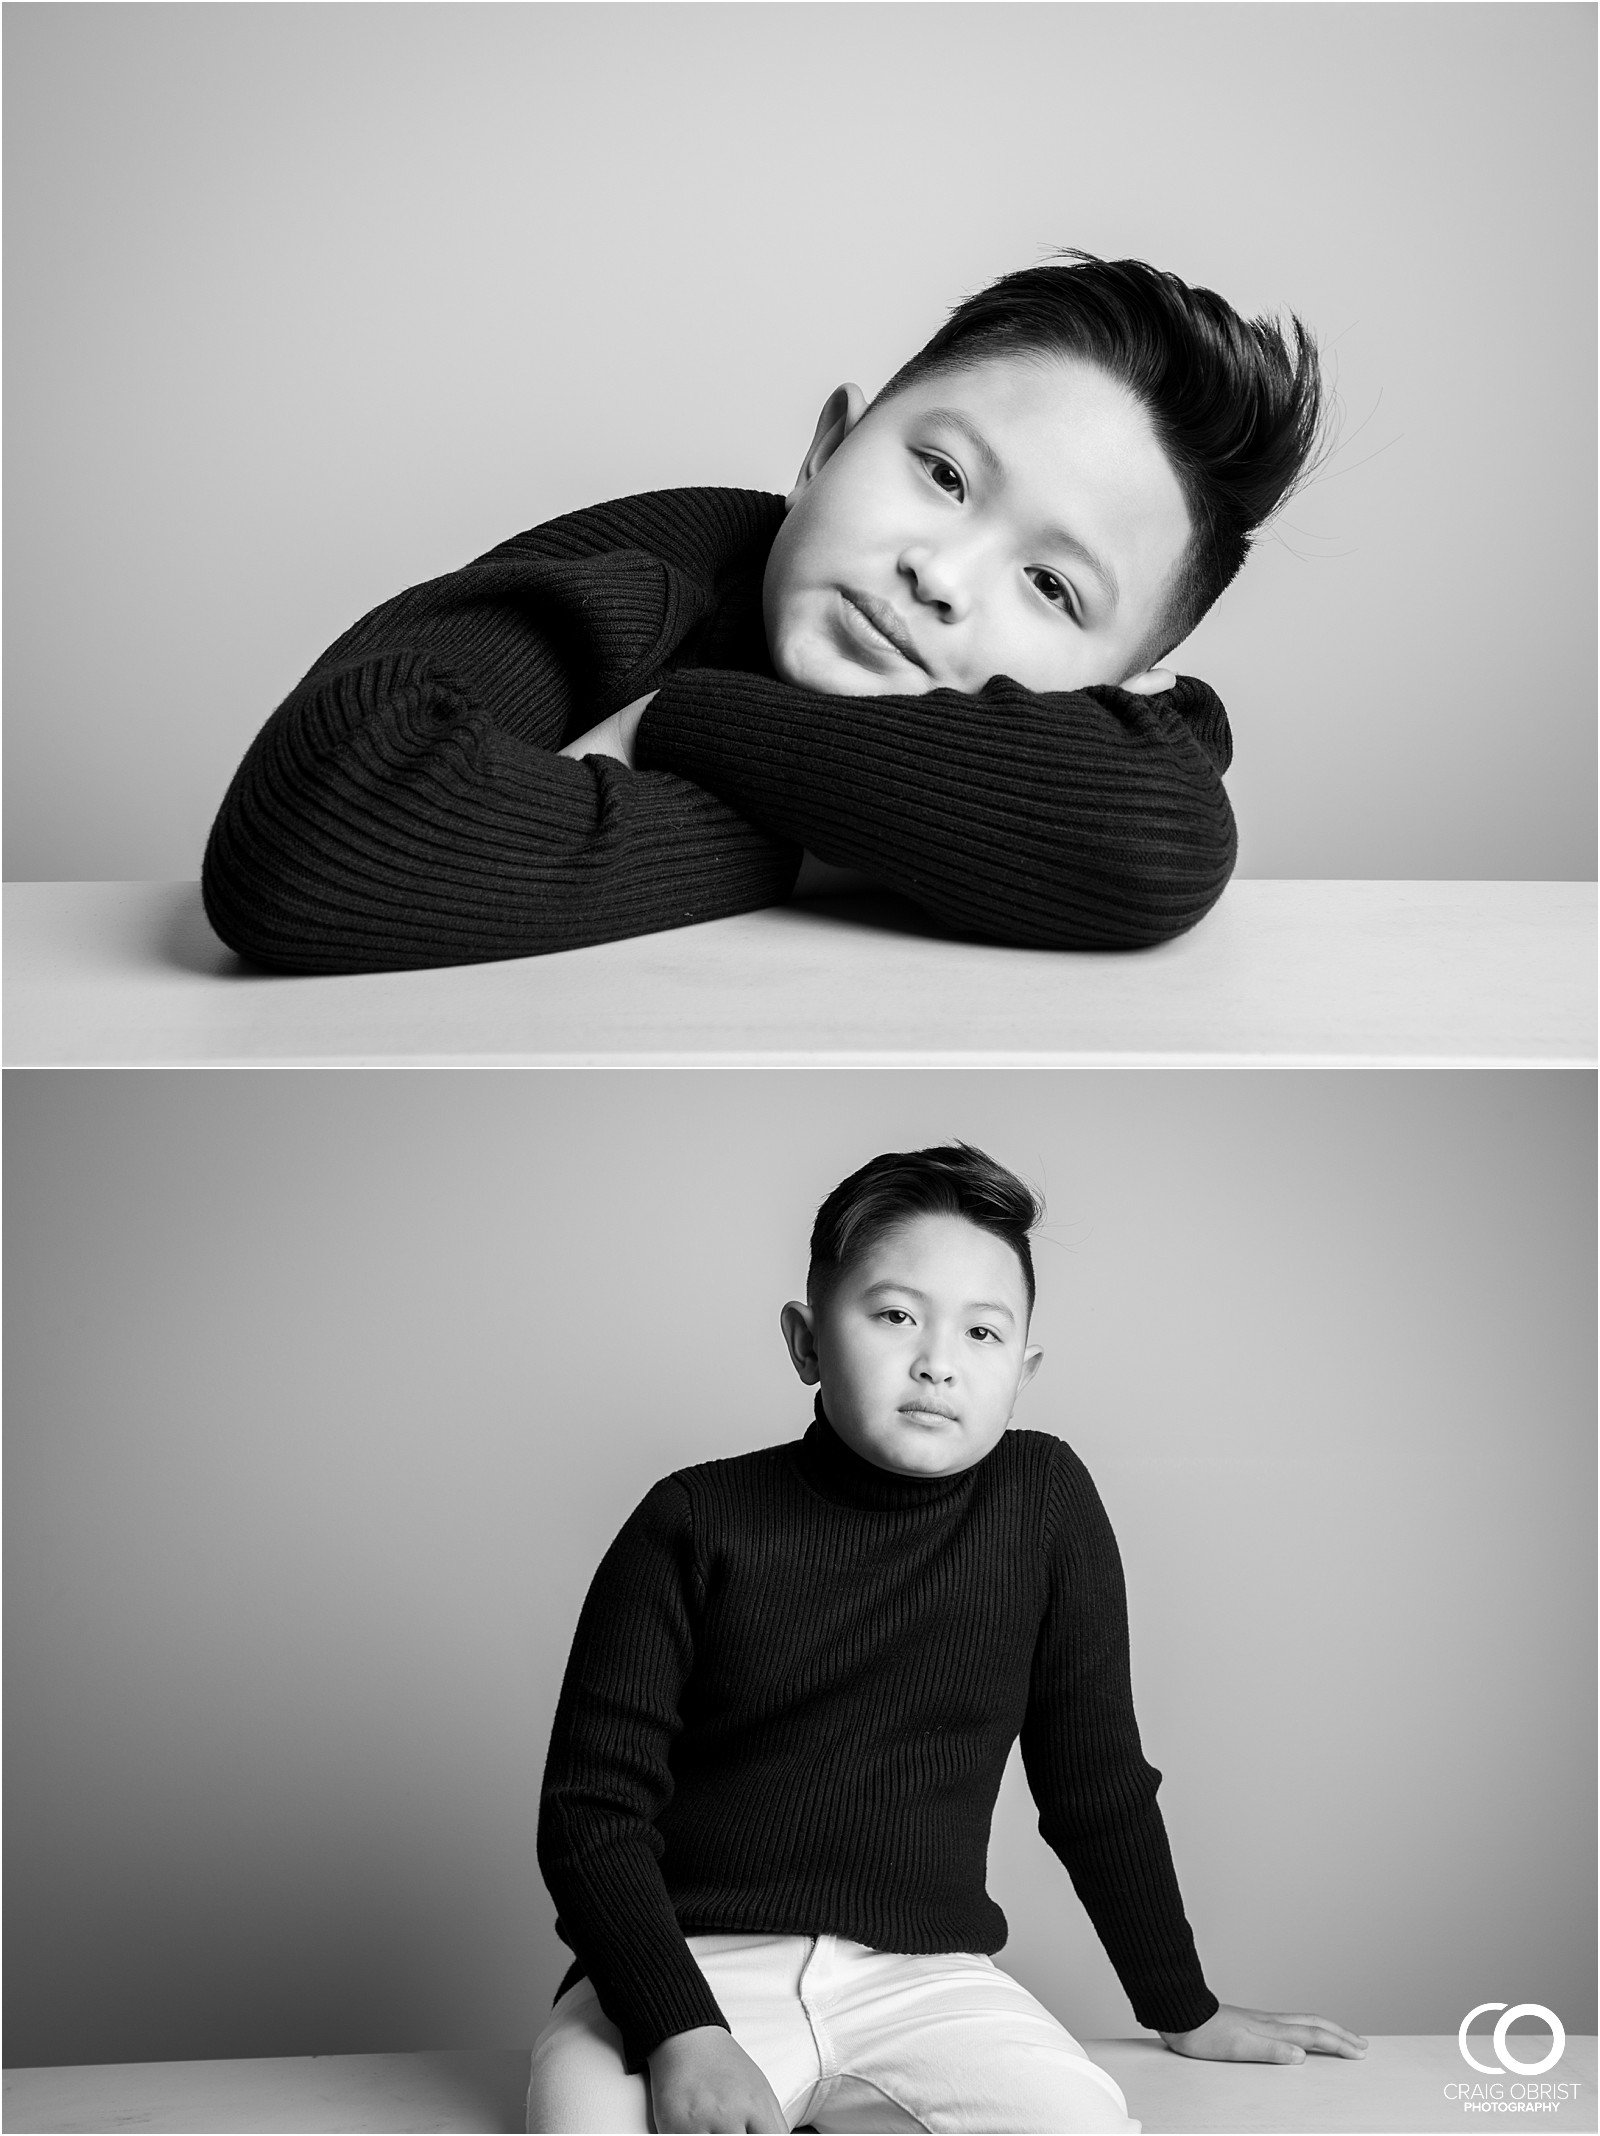 Studio Black and white bw portraits family kids models_0001.jpg